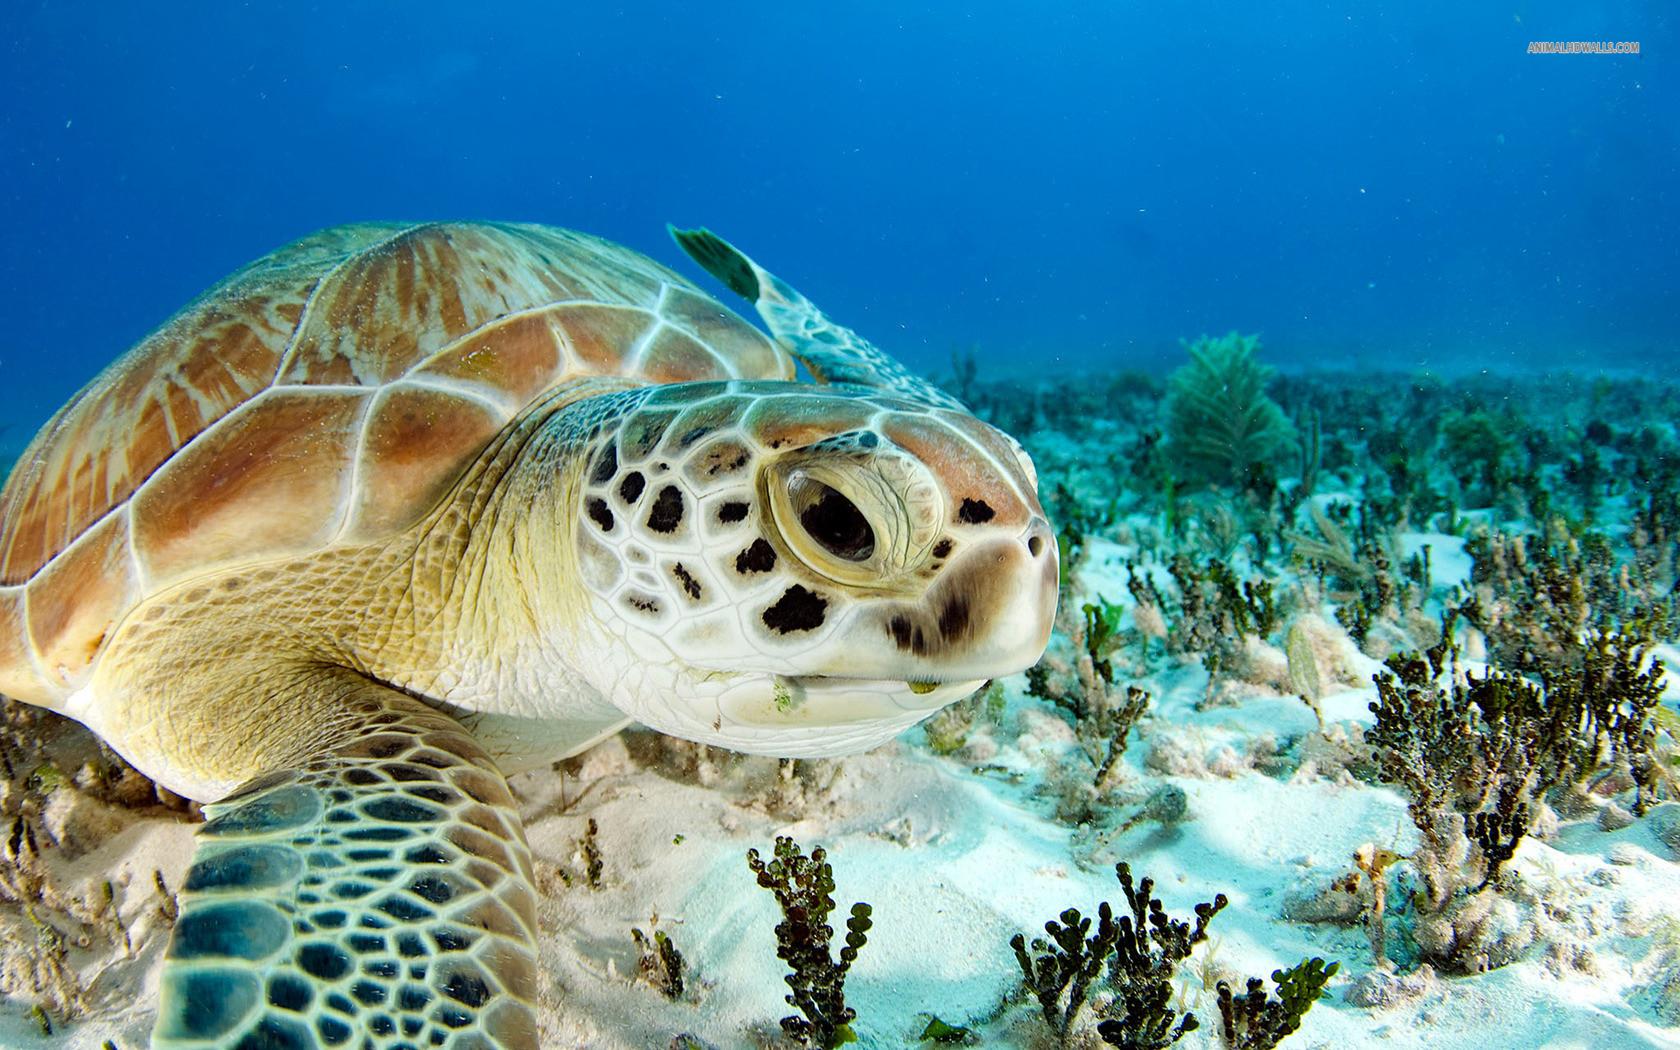 Anyone in need of Sea Turtle wallpaper?